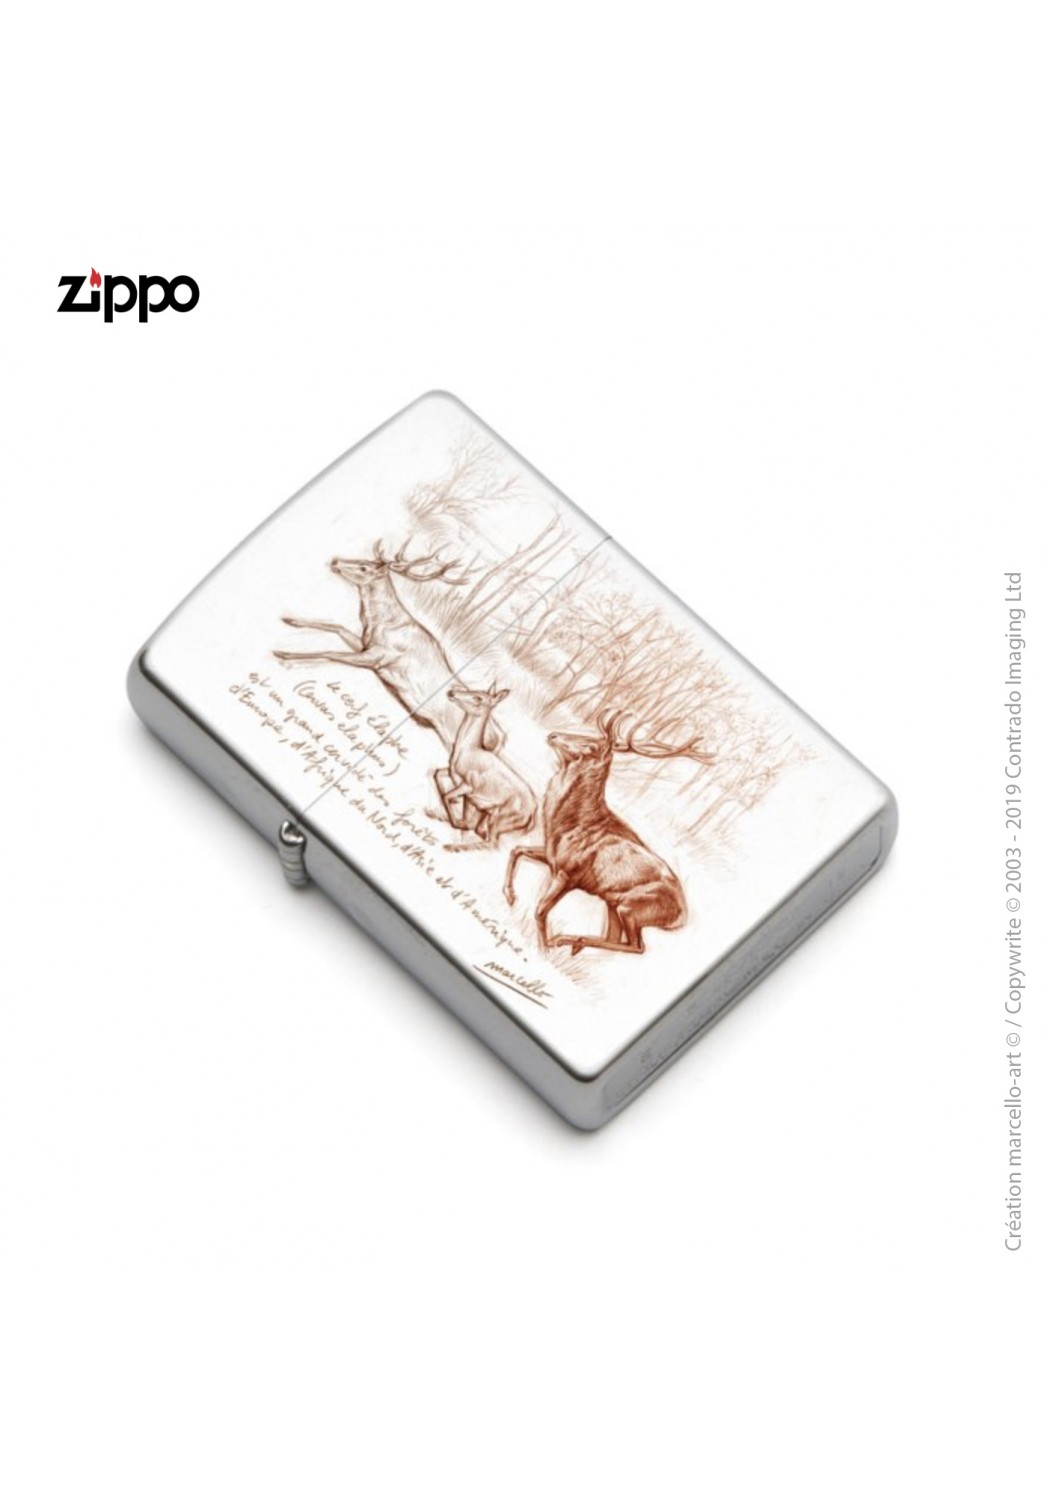 Marcello-art: Decoration accessoiries Zippo 271 red deer